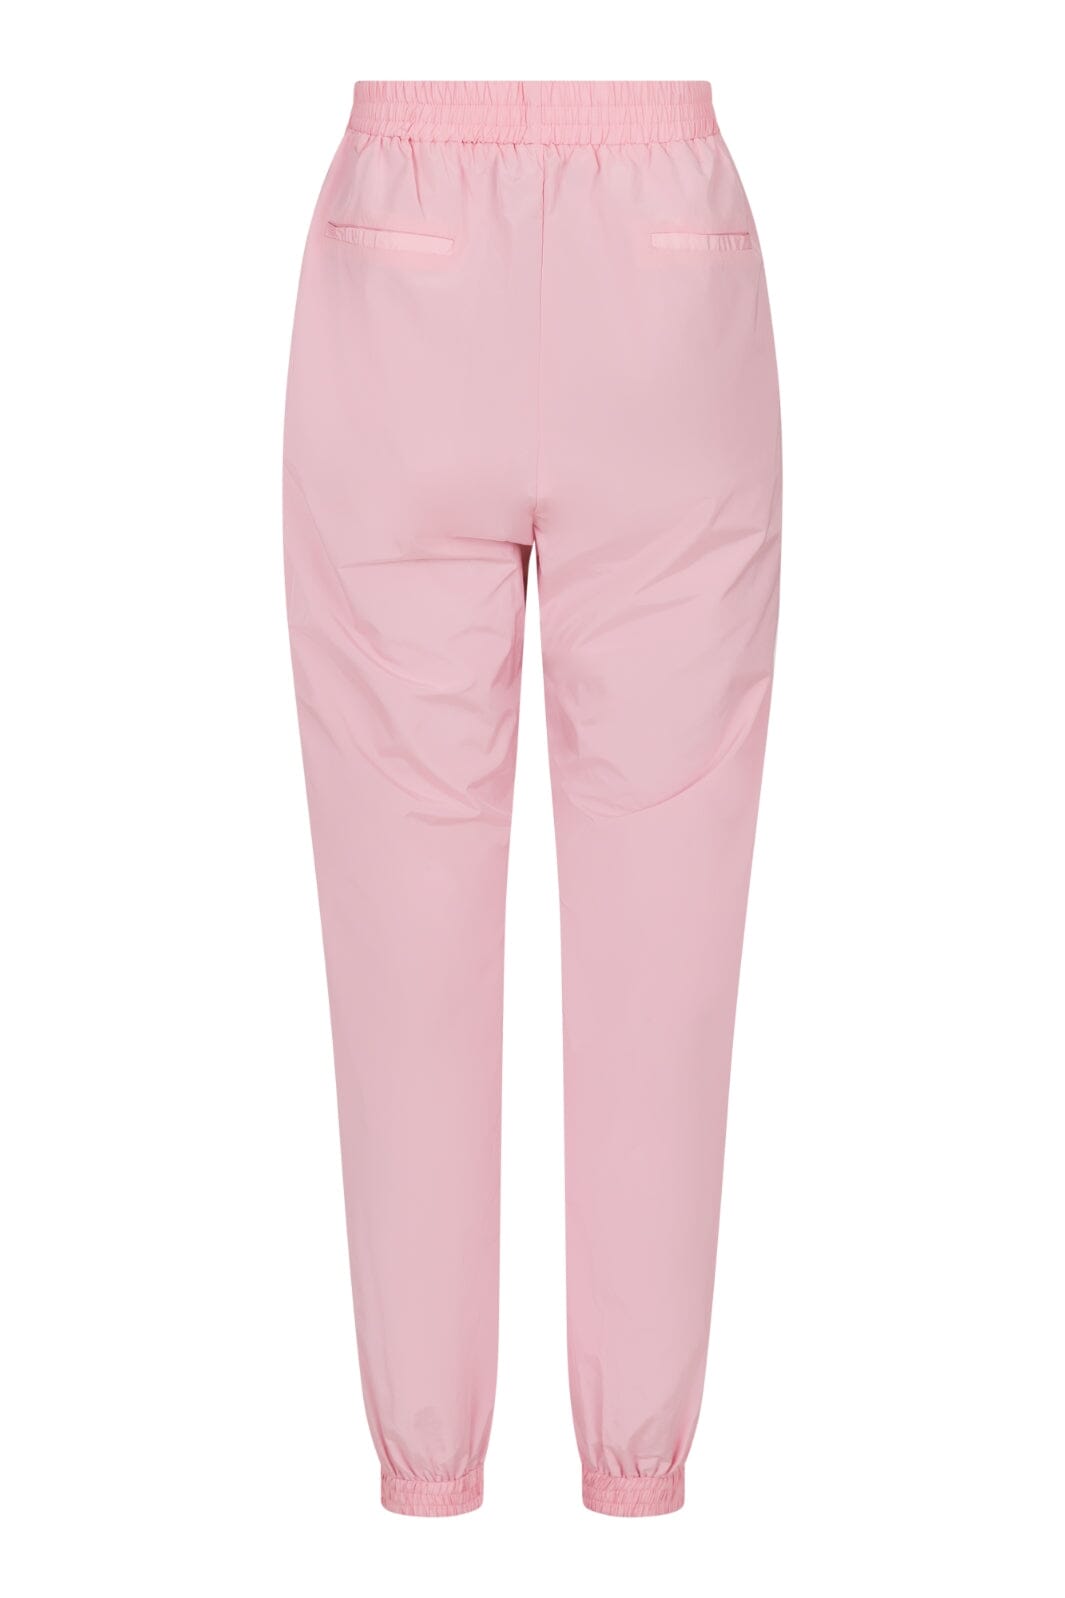 Valentin Studio - Foxy Pants - Soft Pink Bukser 